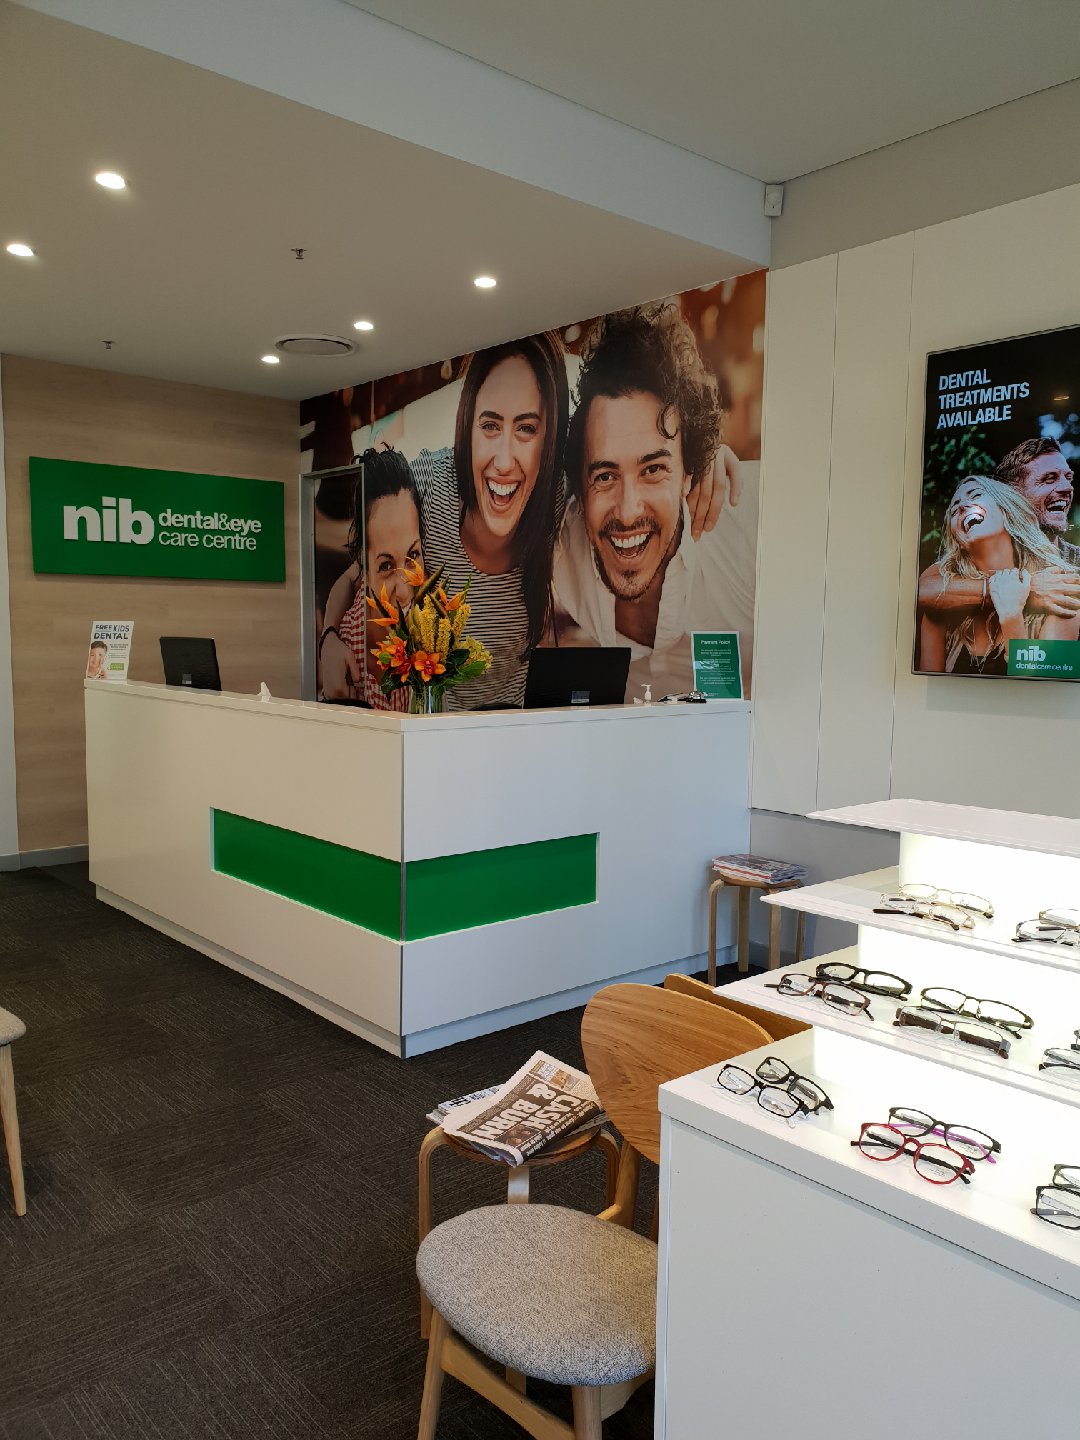 nib Dental Care Centre Brisbane Brisbane